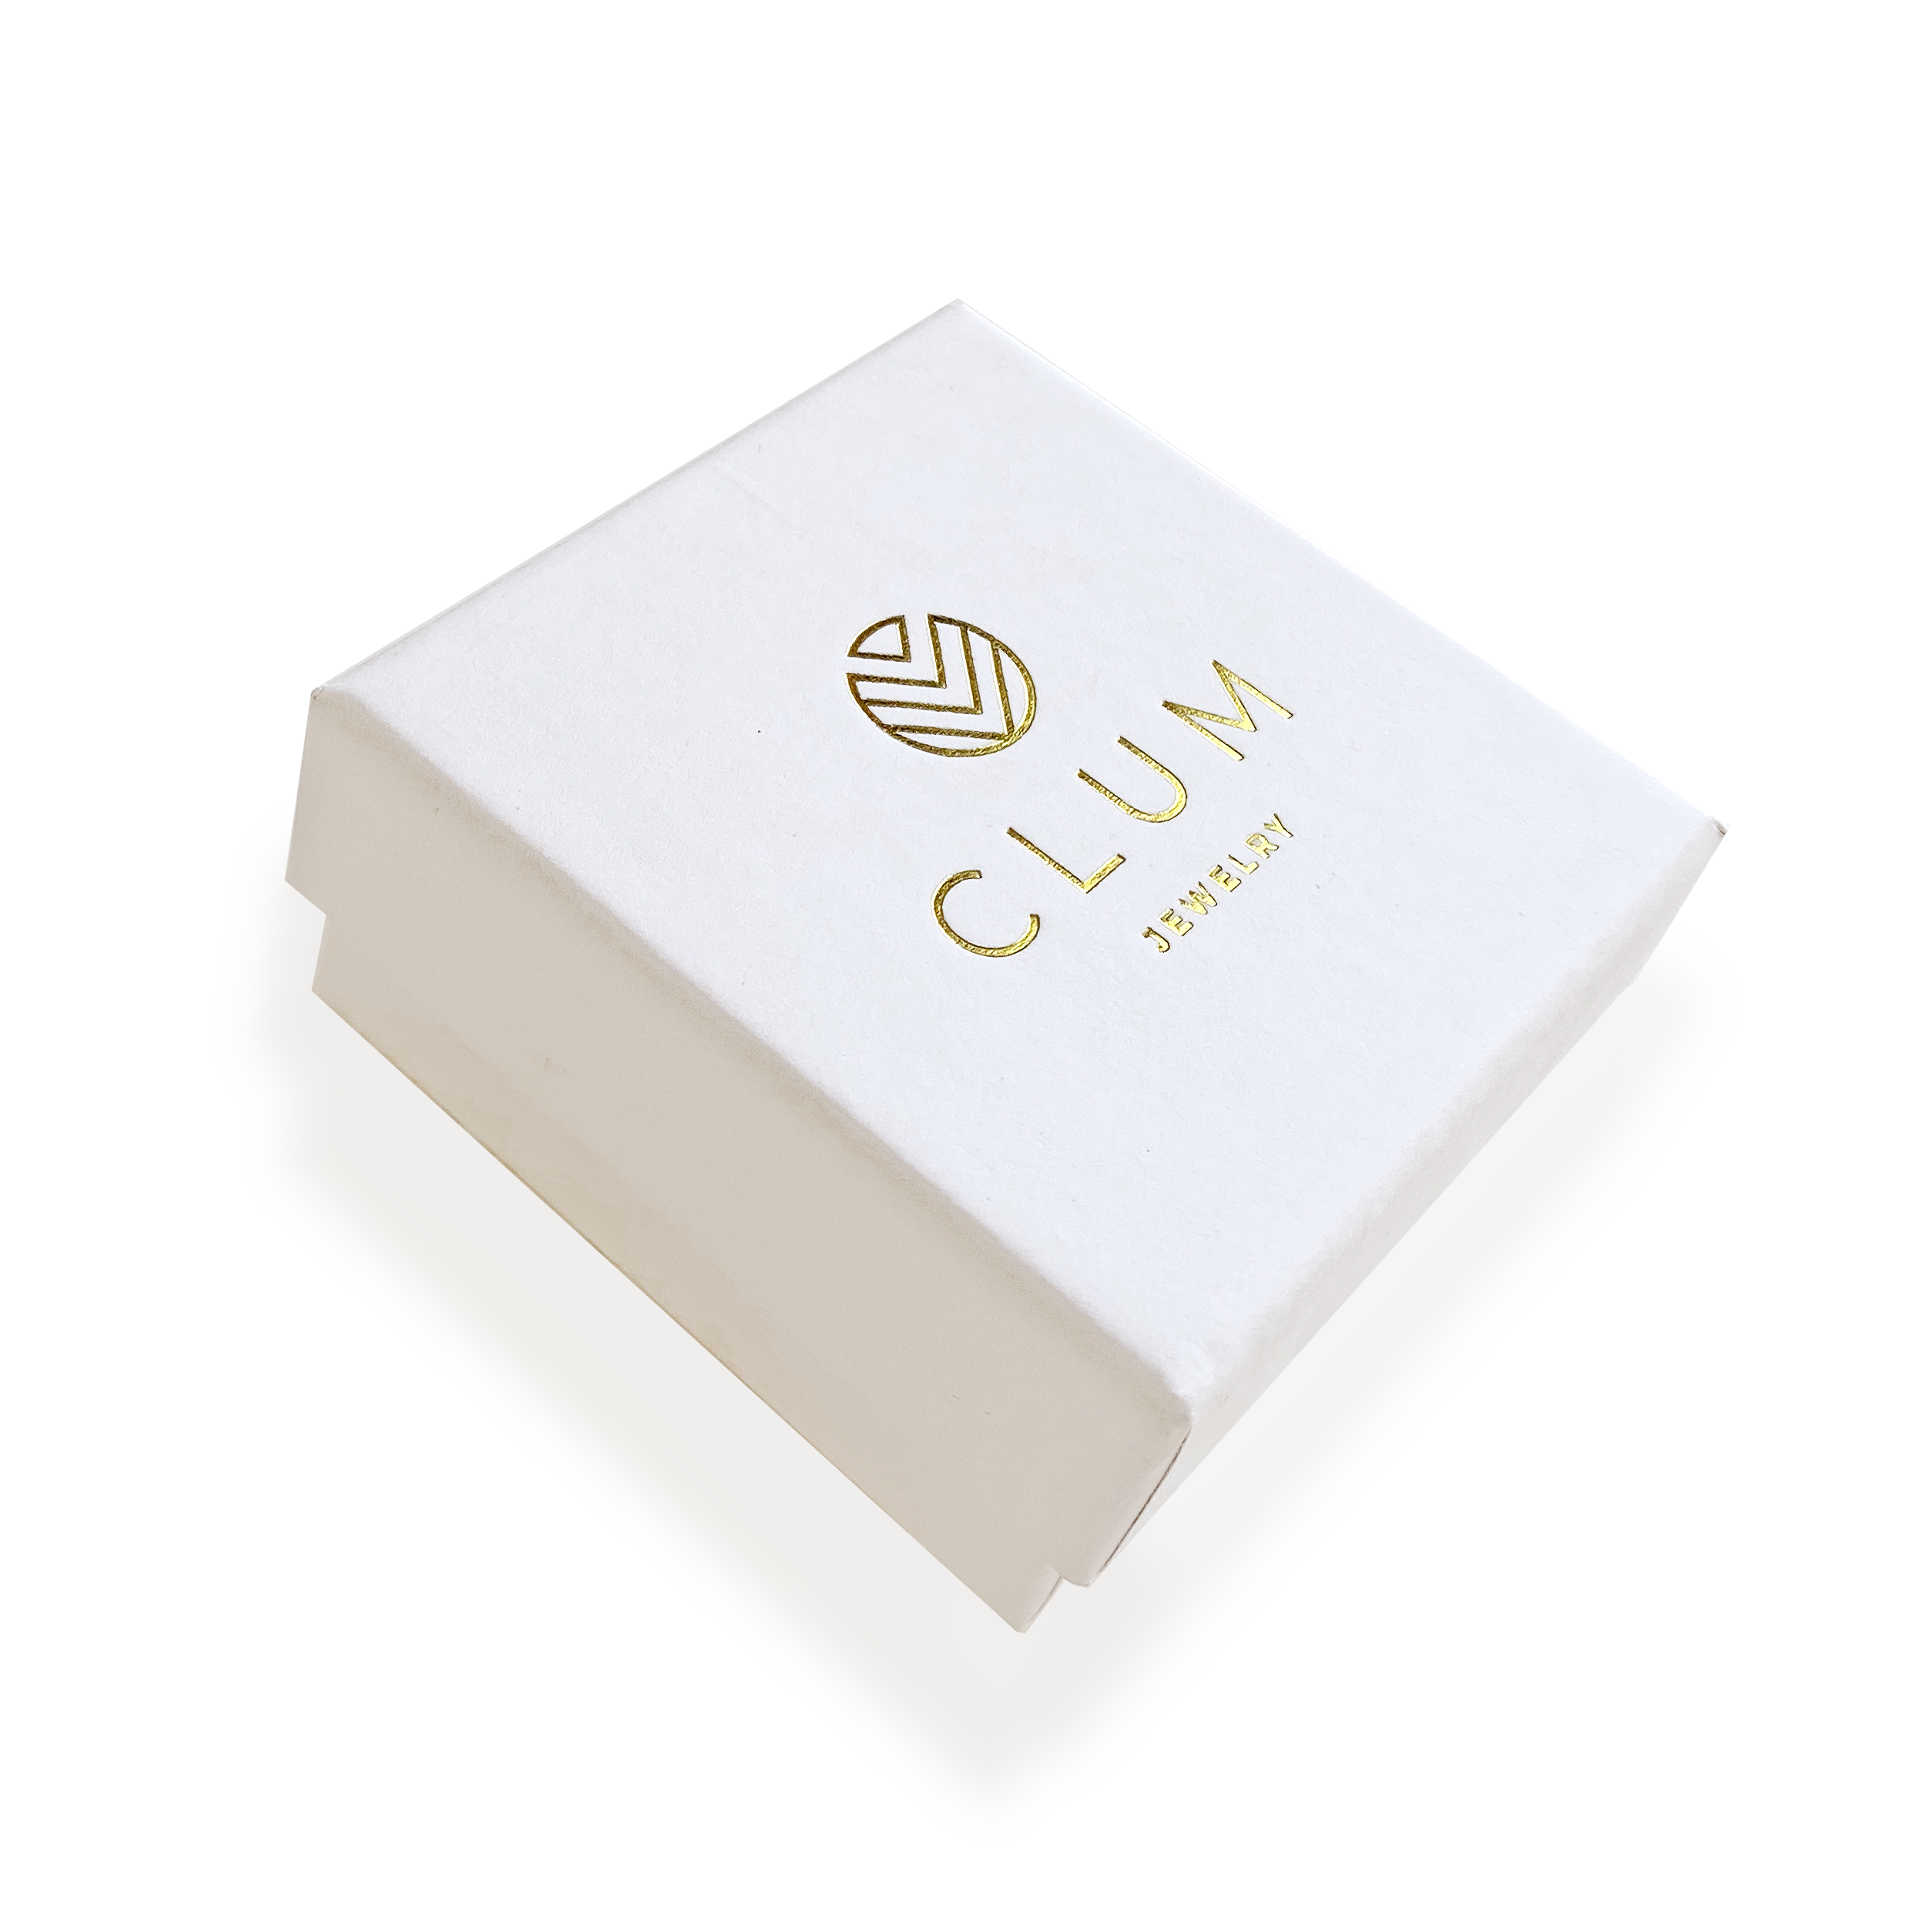 CLUM box